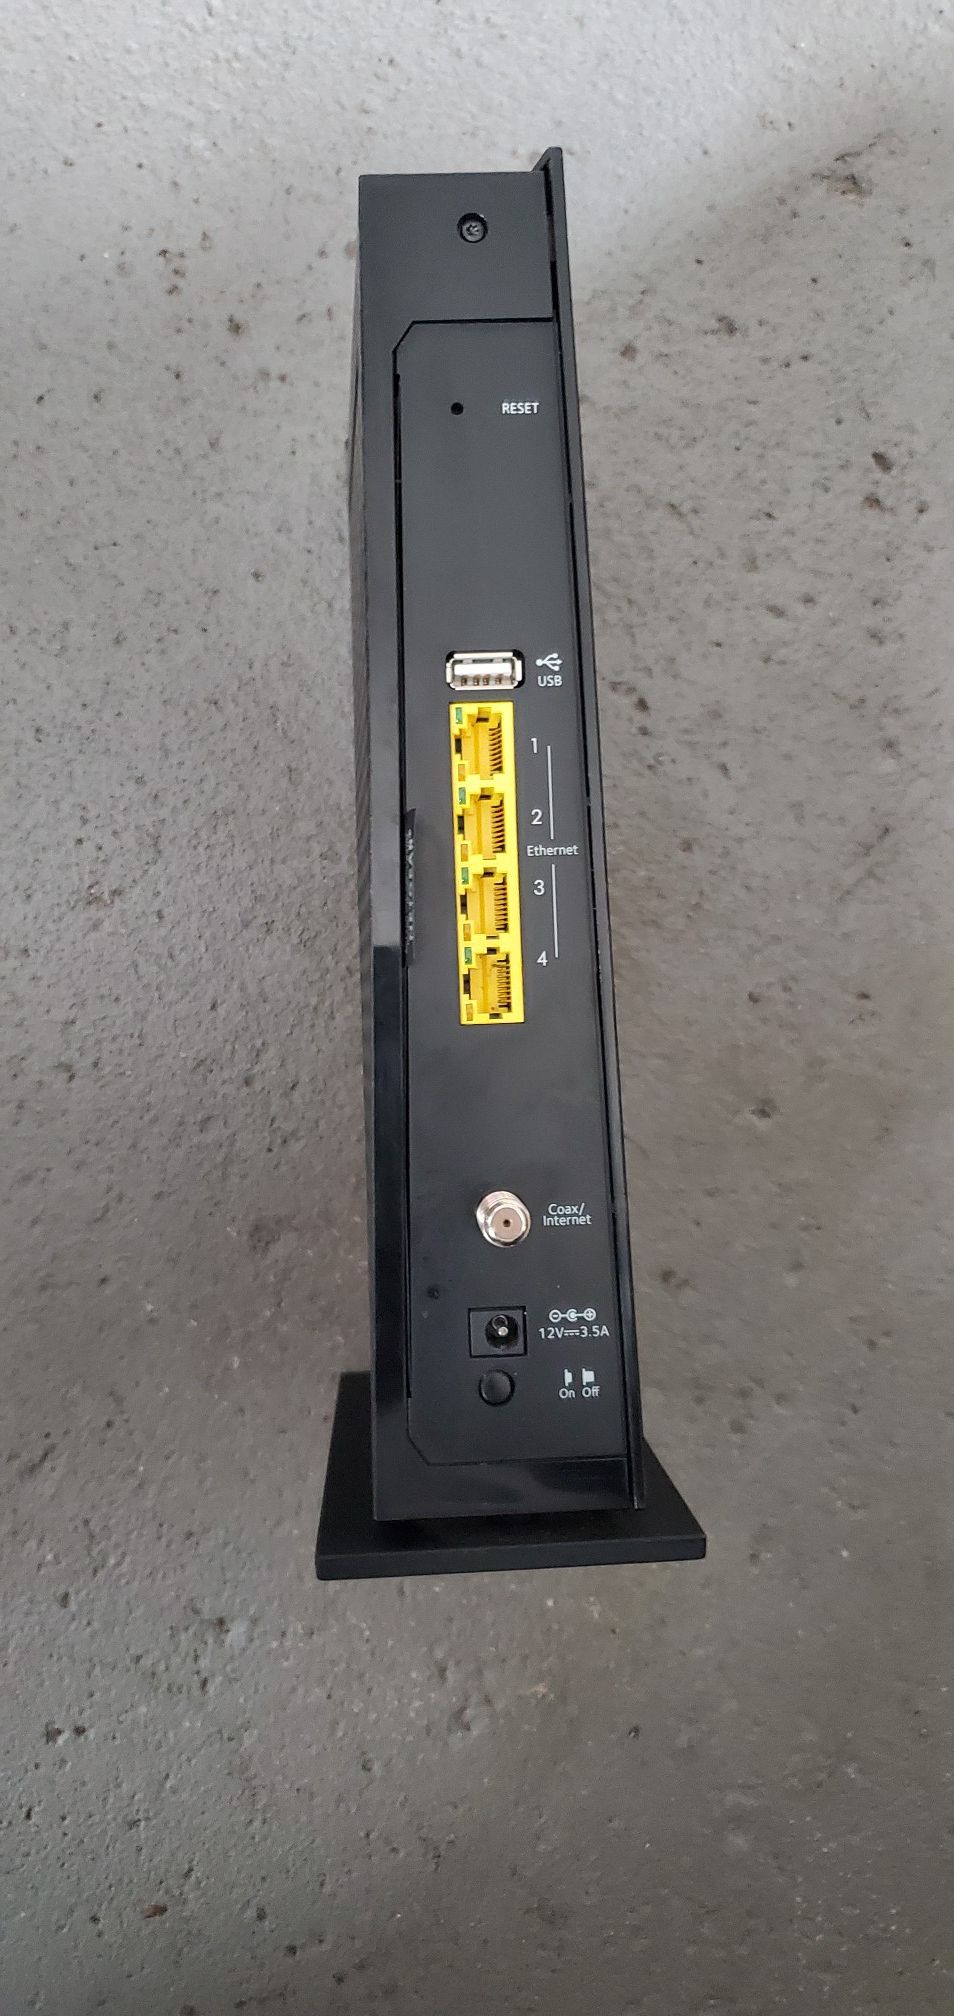 Netgear Cable Modem Model C6300